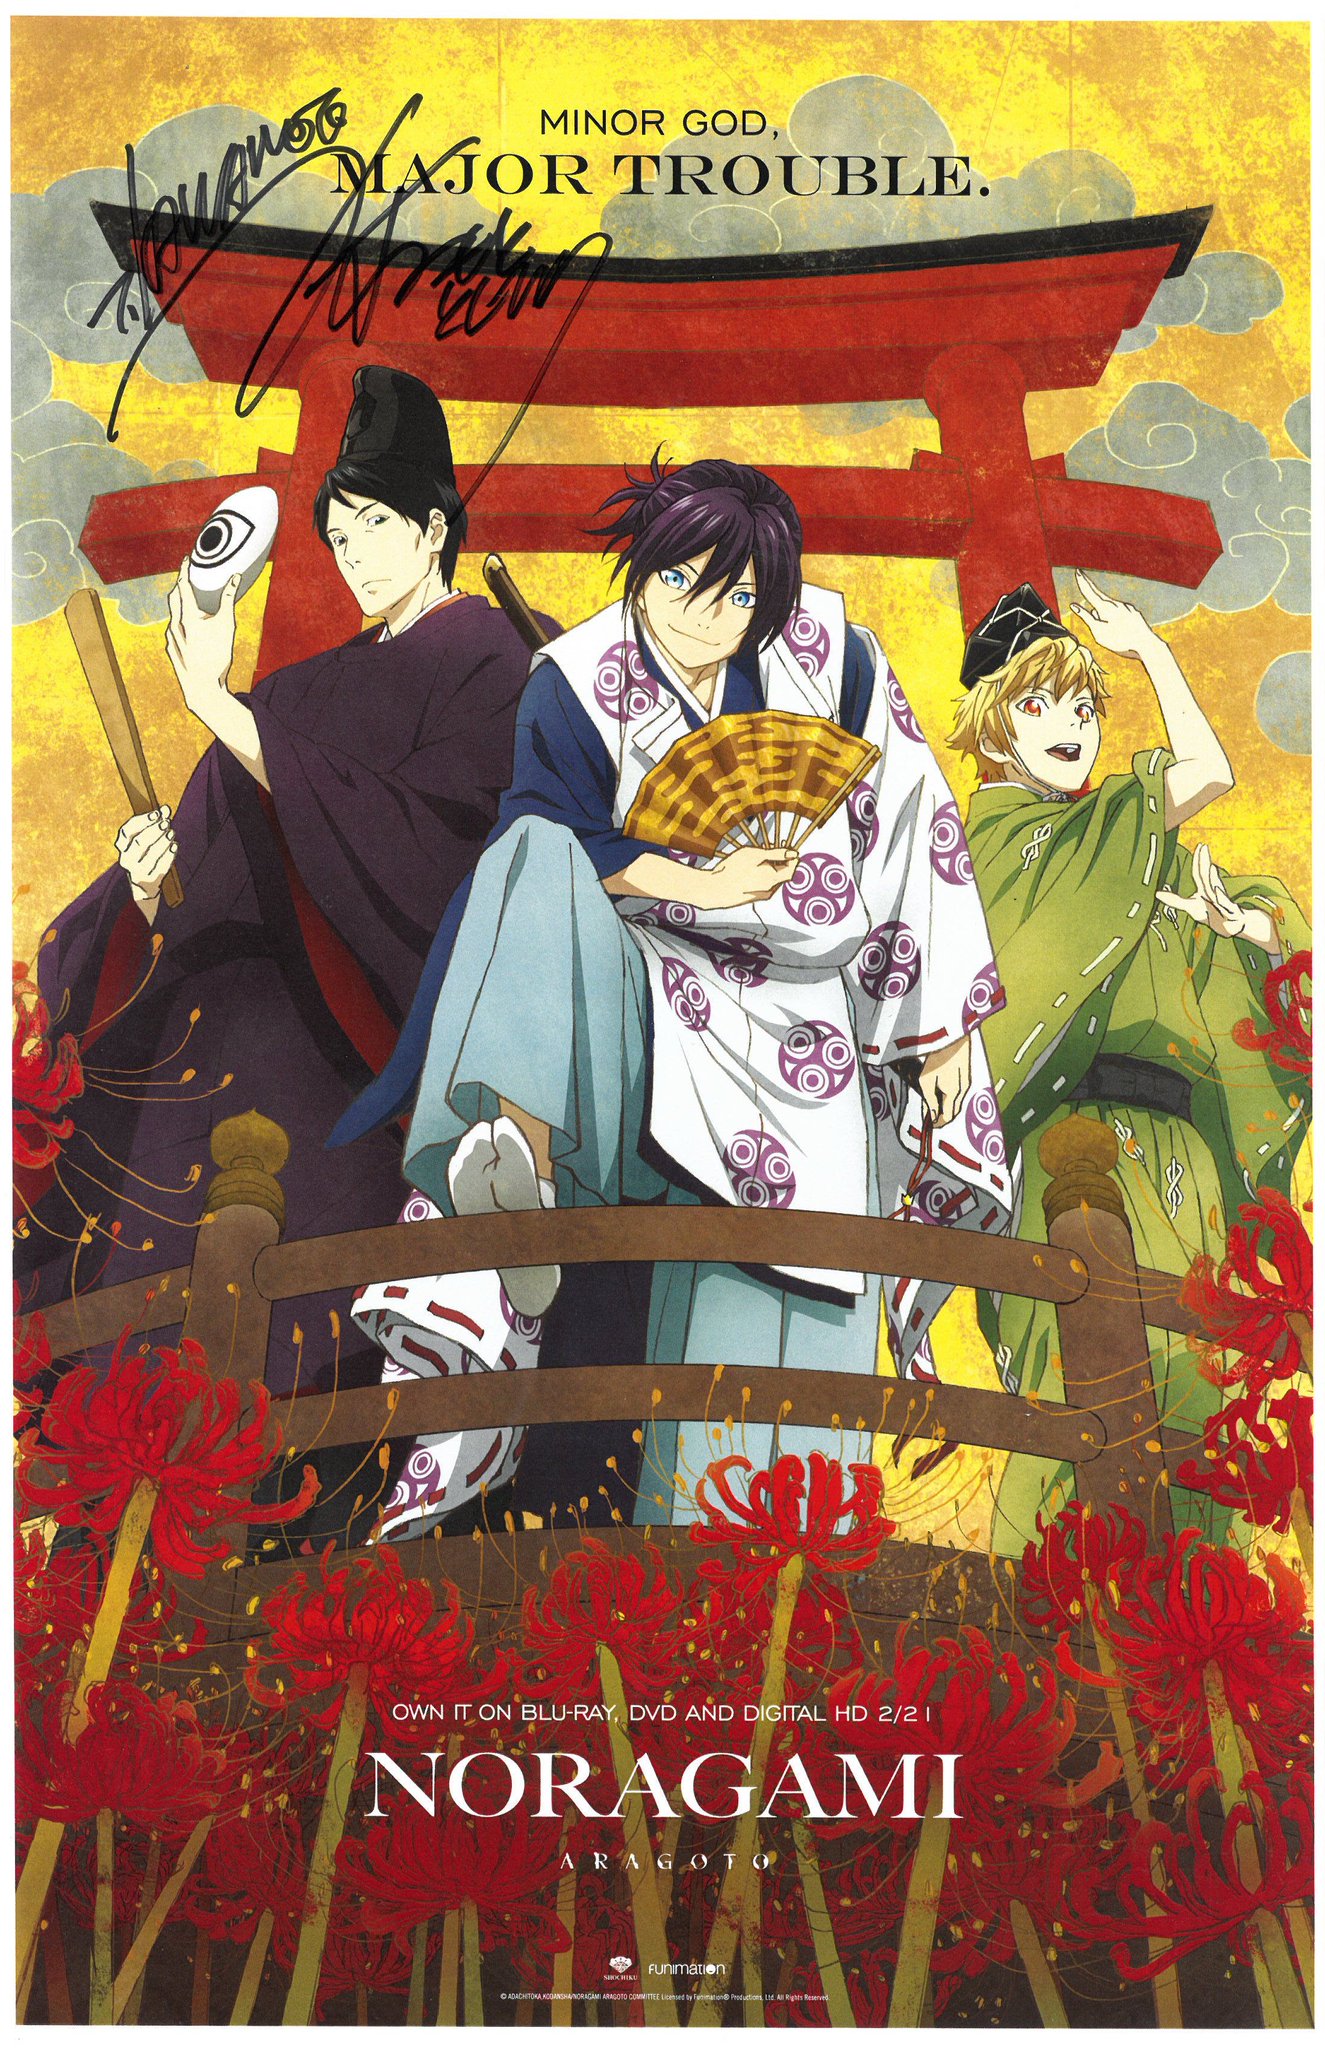 Noragami Aragoto  Minimalist poster, Anime, Poster